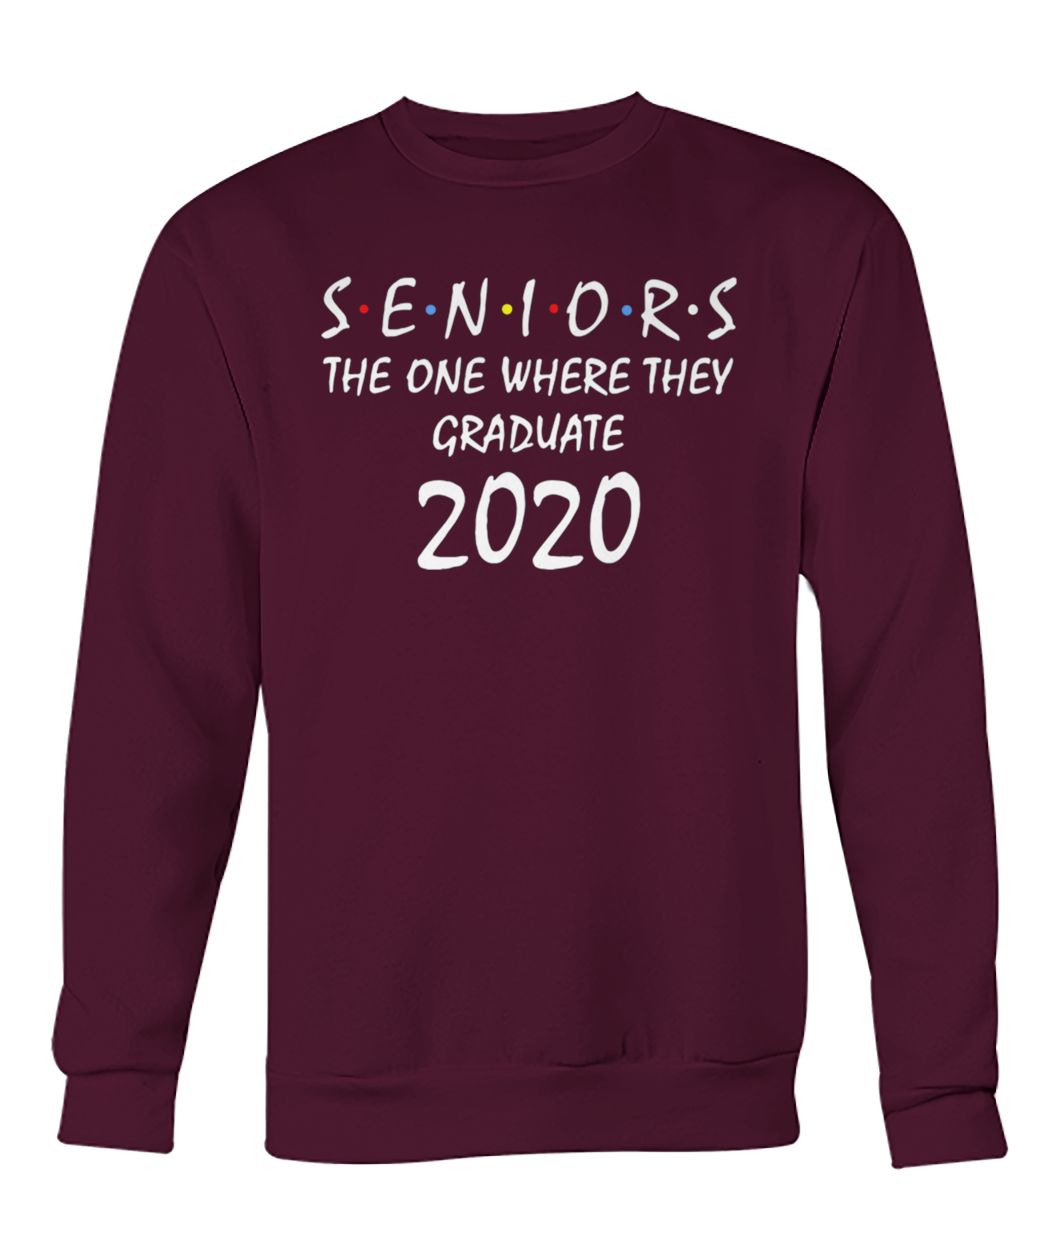 Seniors the one where they graduate 2020 crew neck sweatshirt